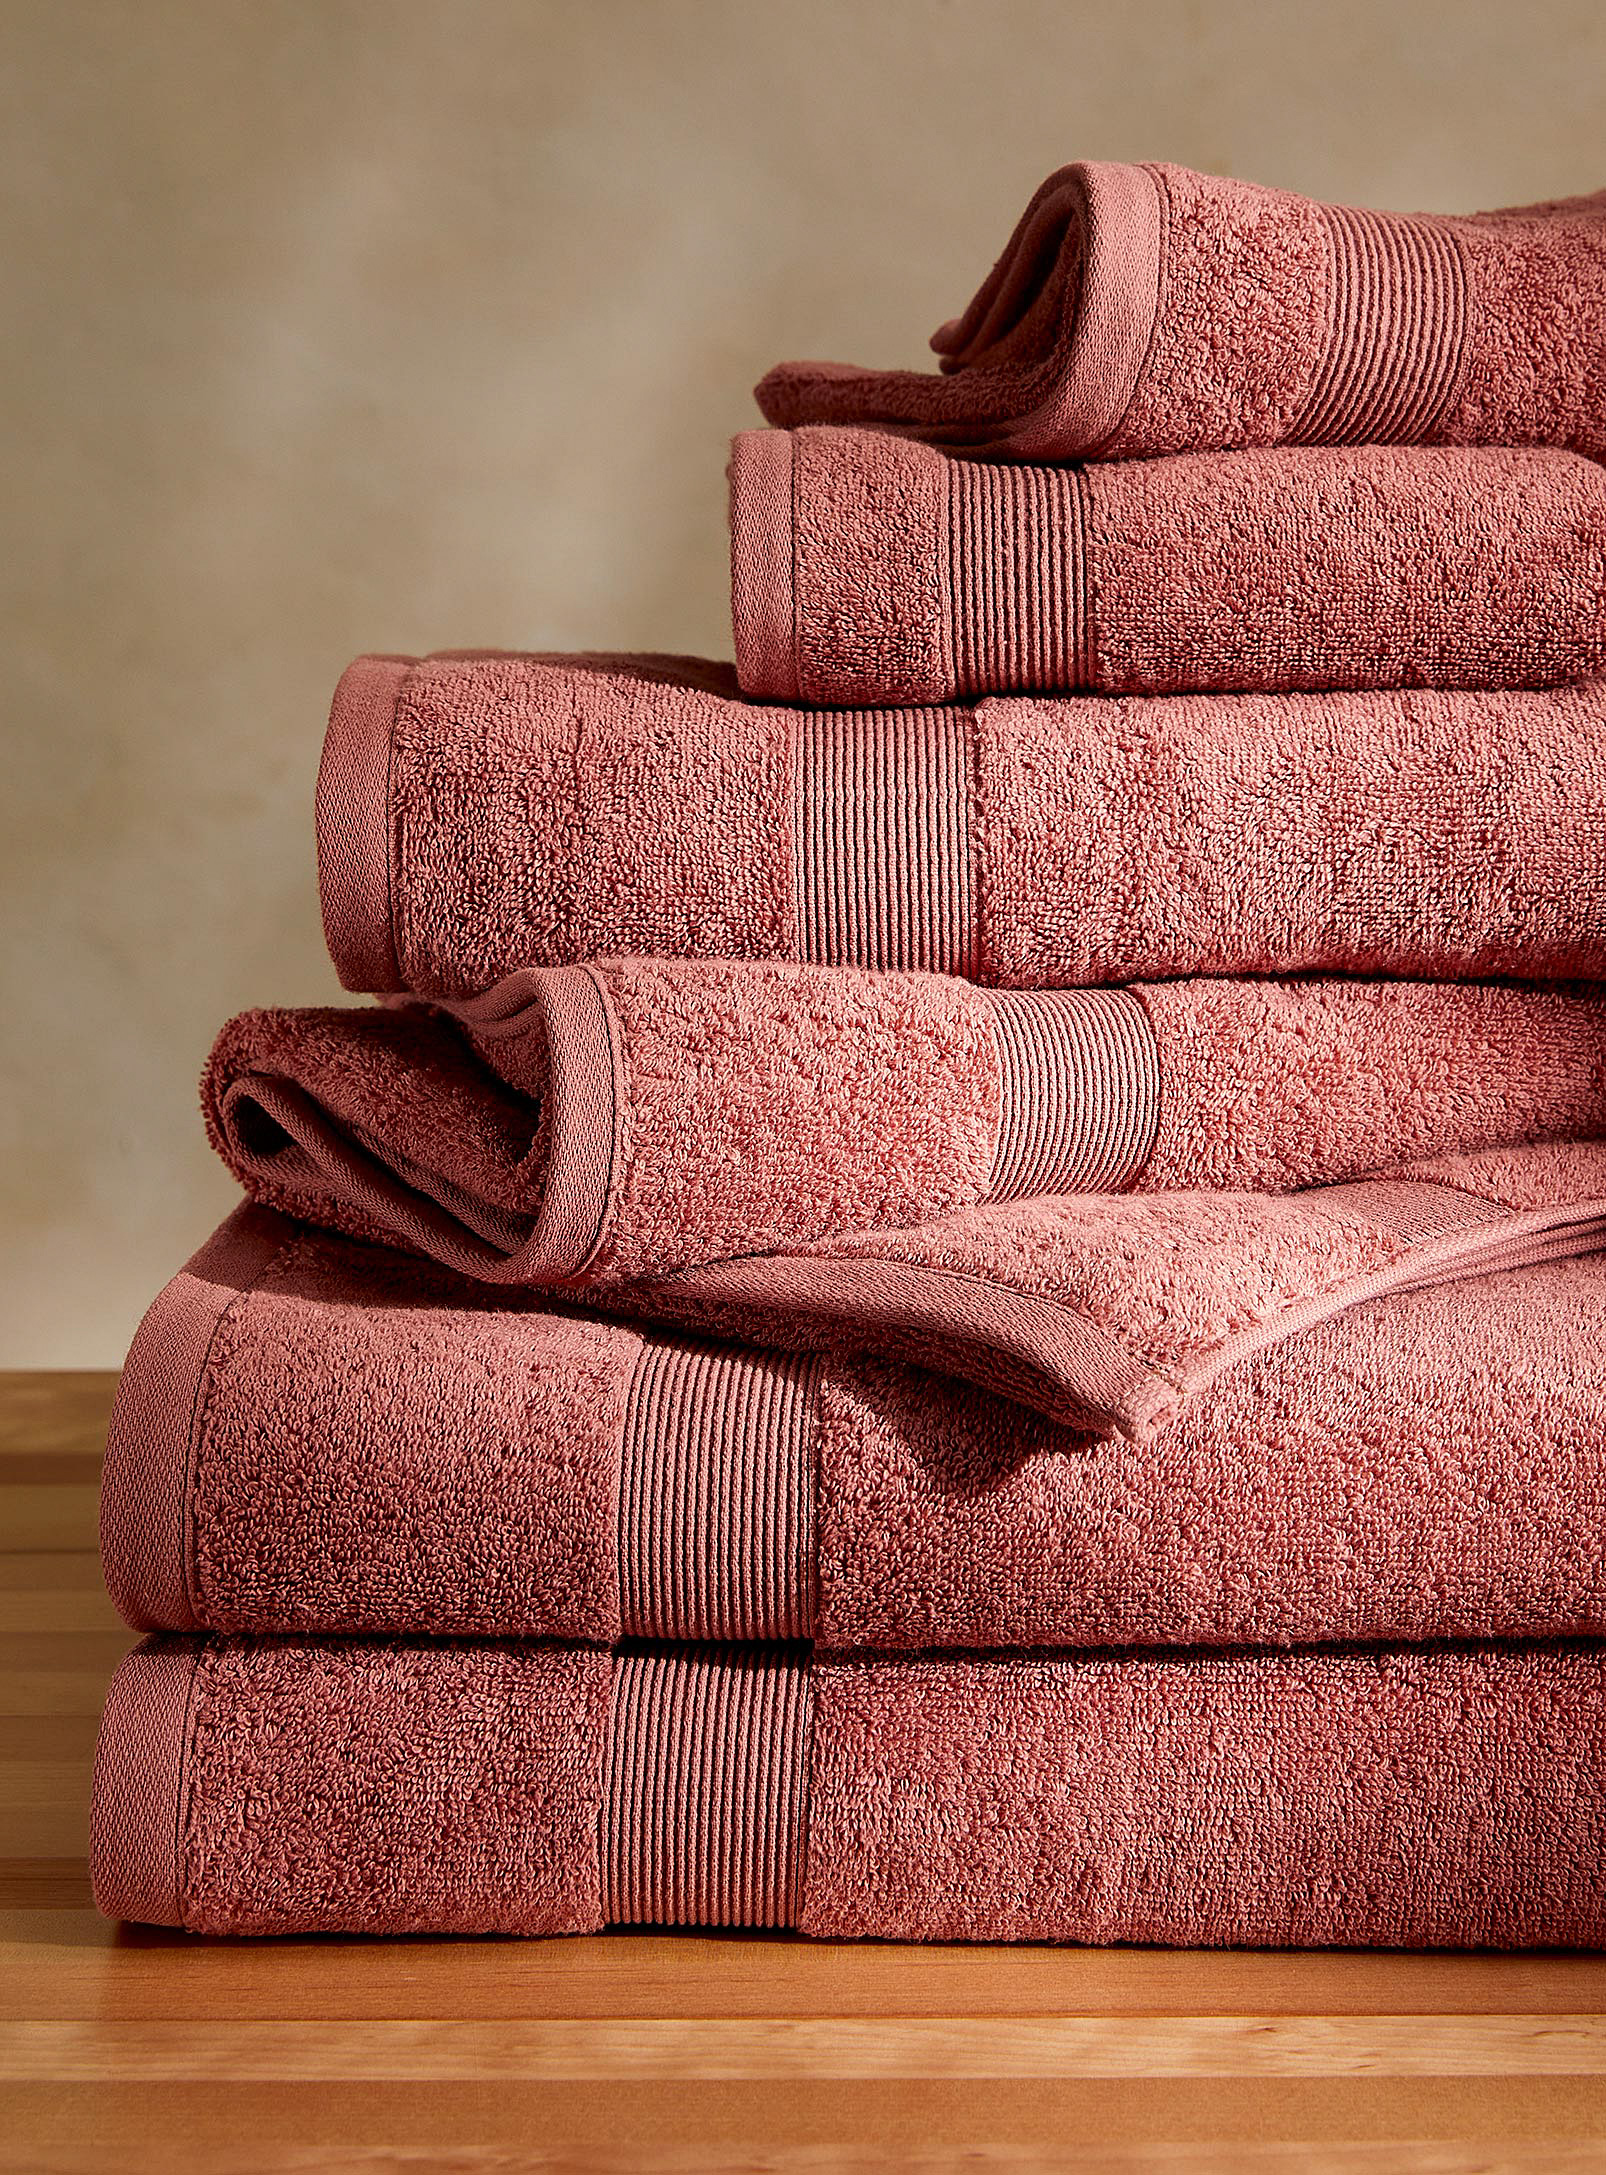 Simons Maison Braided Border Turkish Cotton Towels In Medium Pink